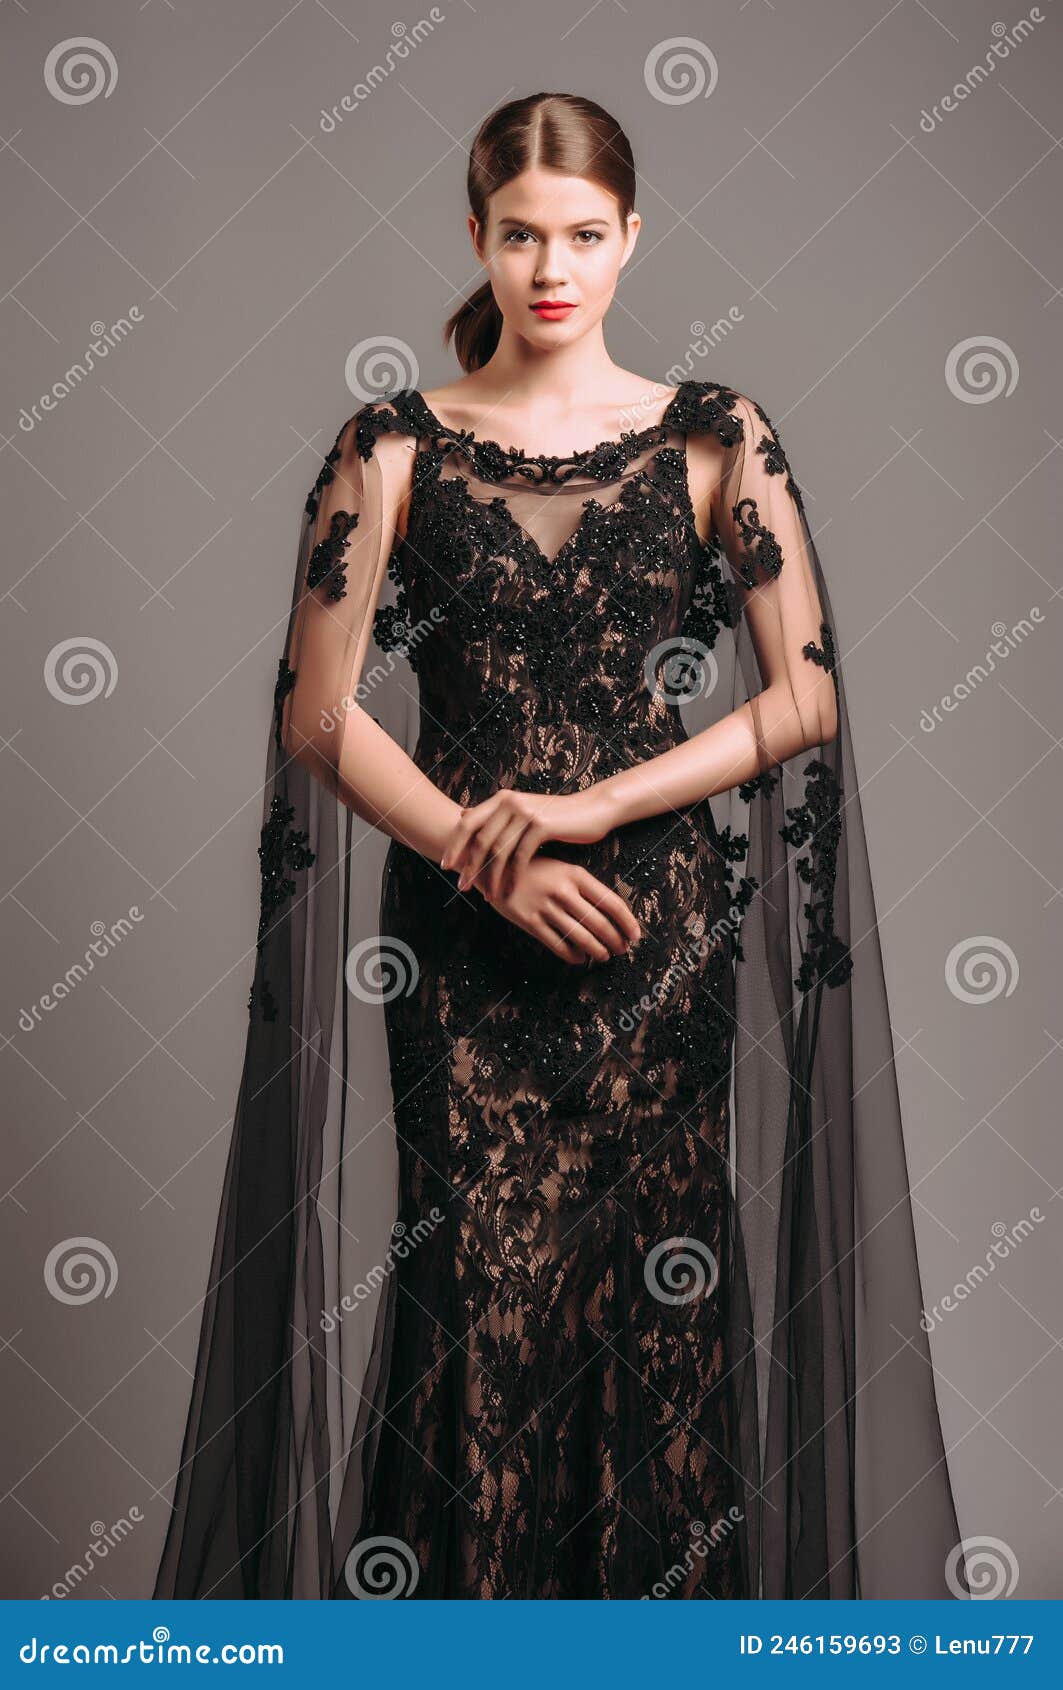 Gothic Black Mermaid Wedding Dresses Long Sleeves V Neck Train Bridal Gowns  | eBay